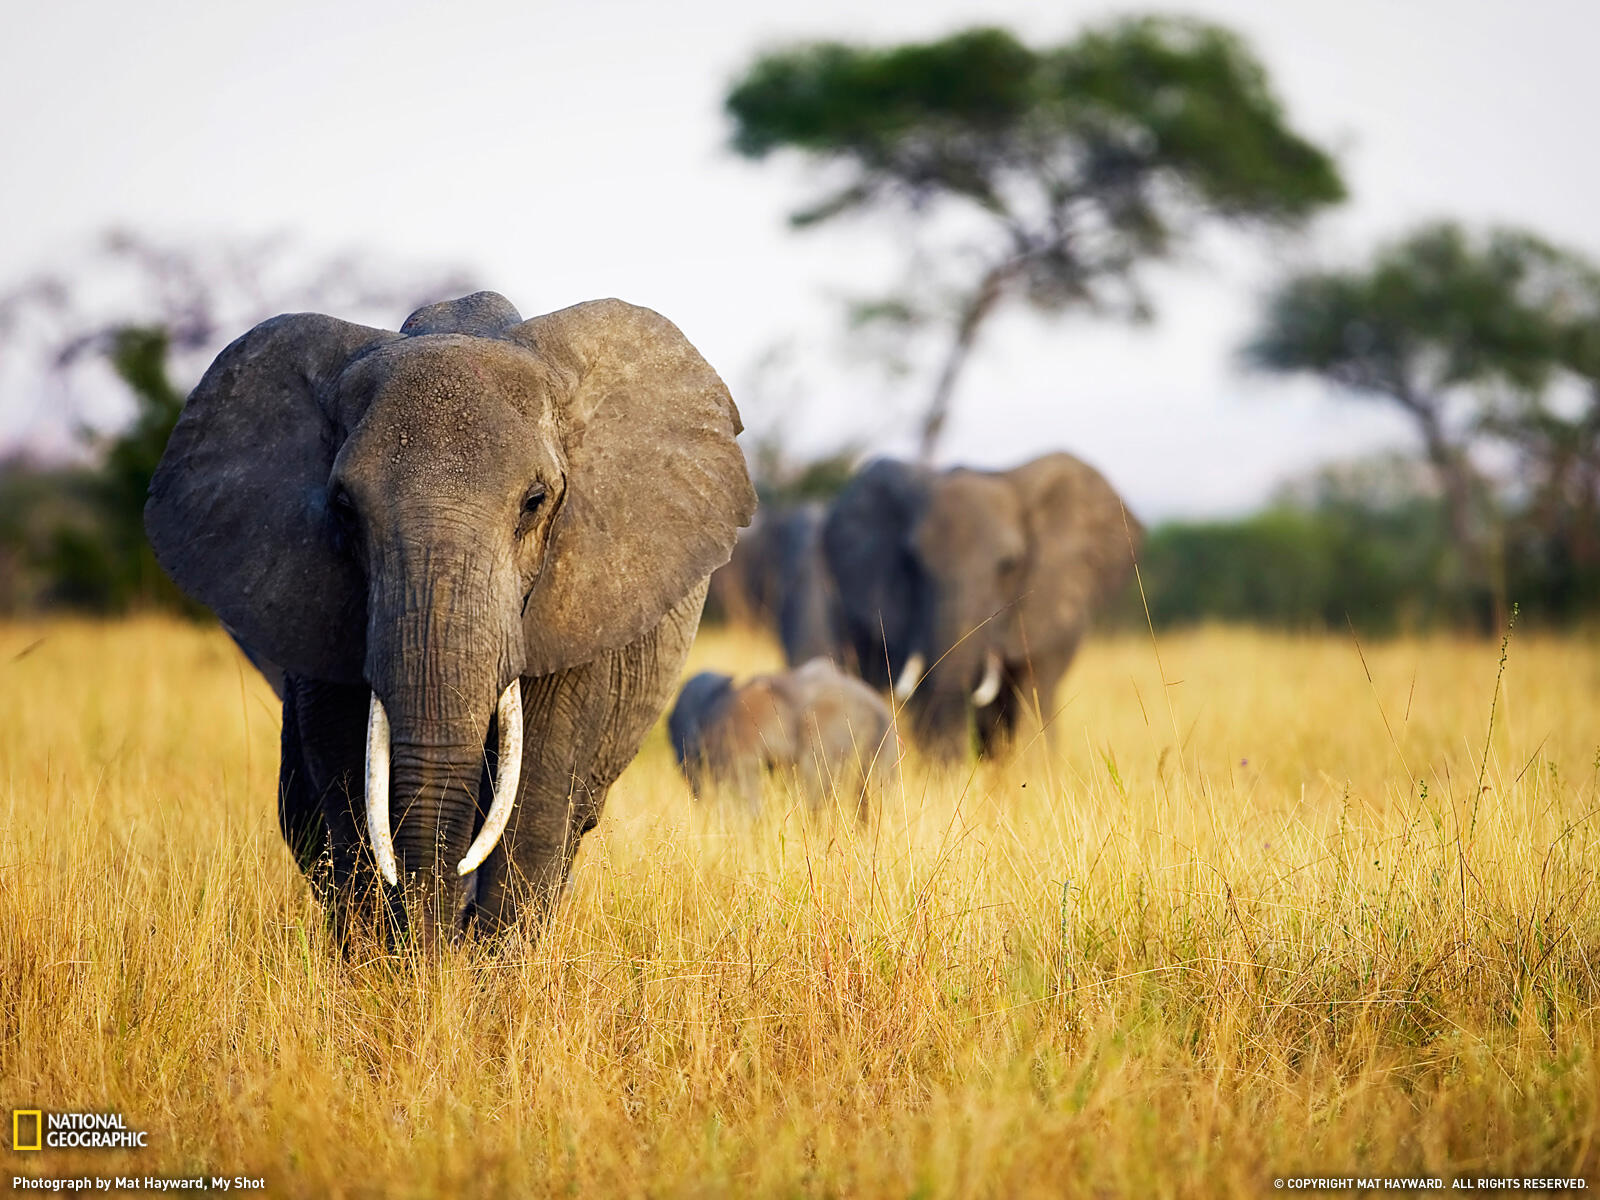 Wallpapers elephants africa family on the desktop